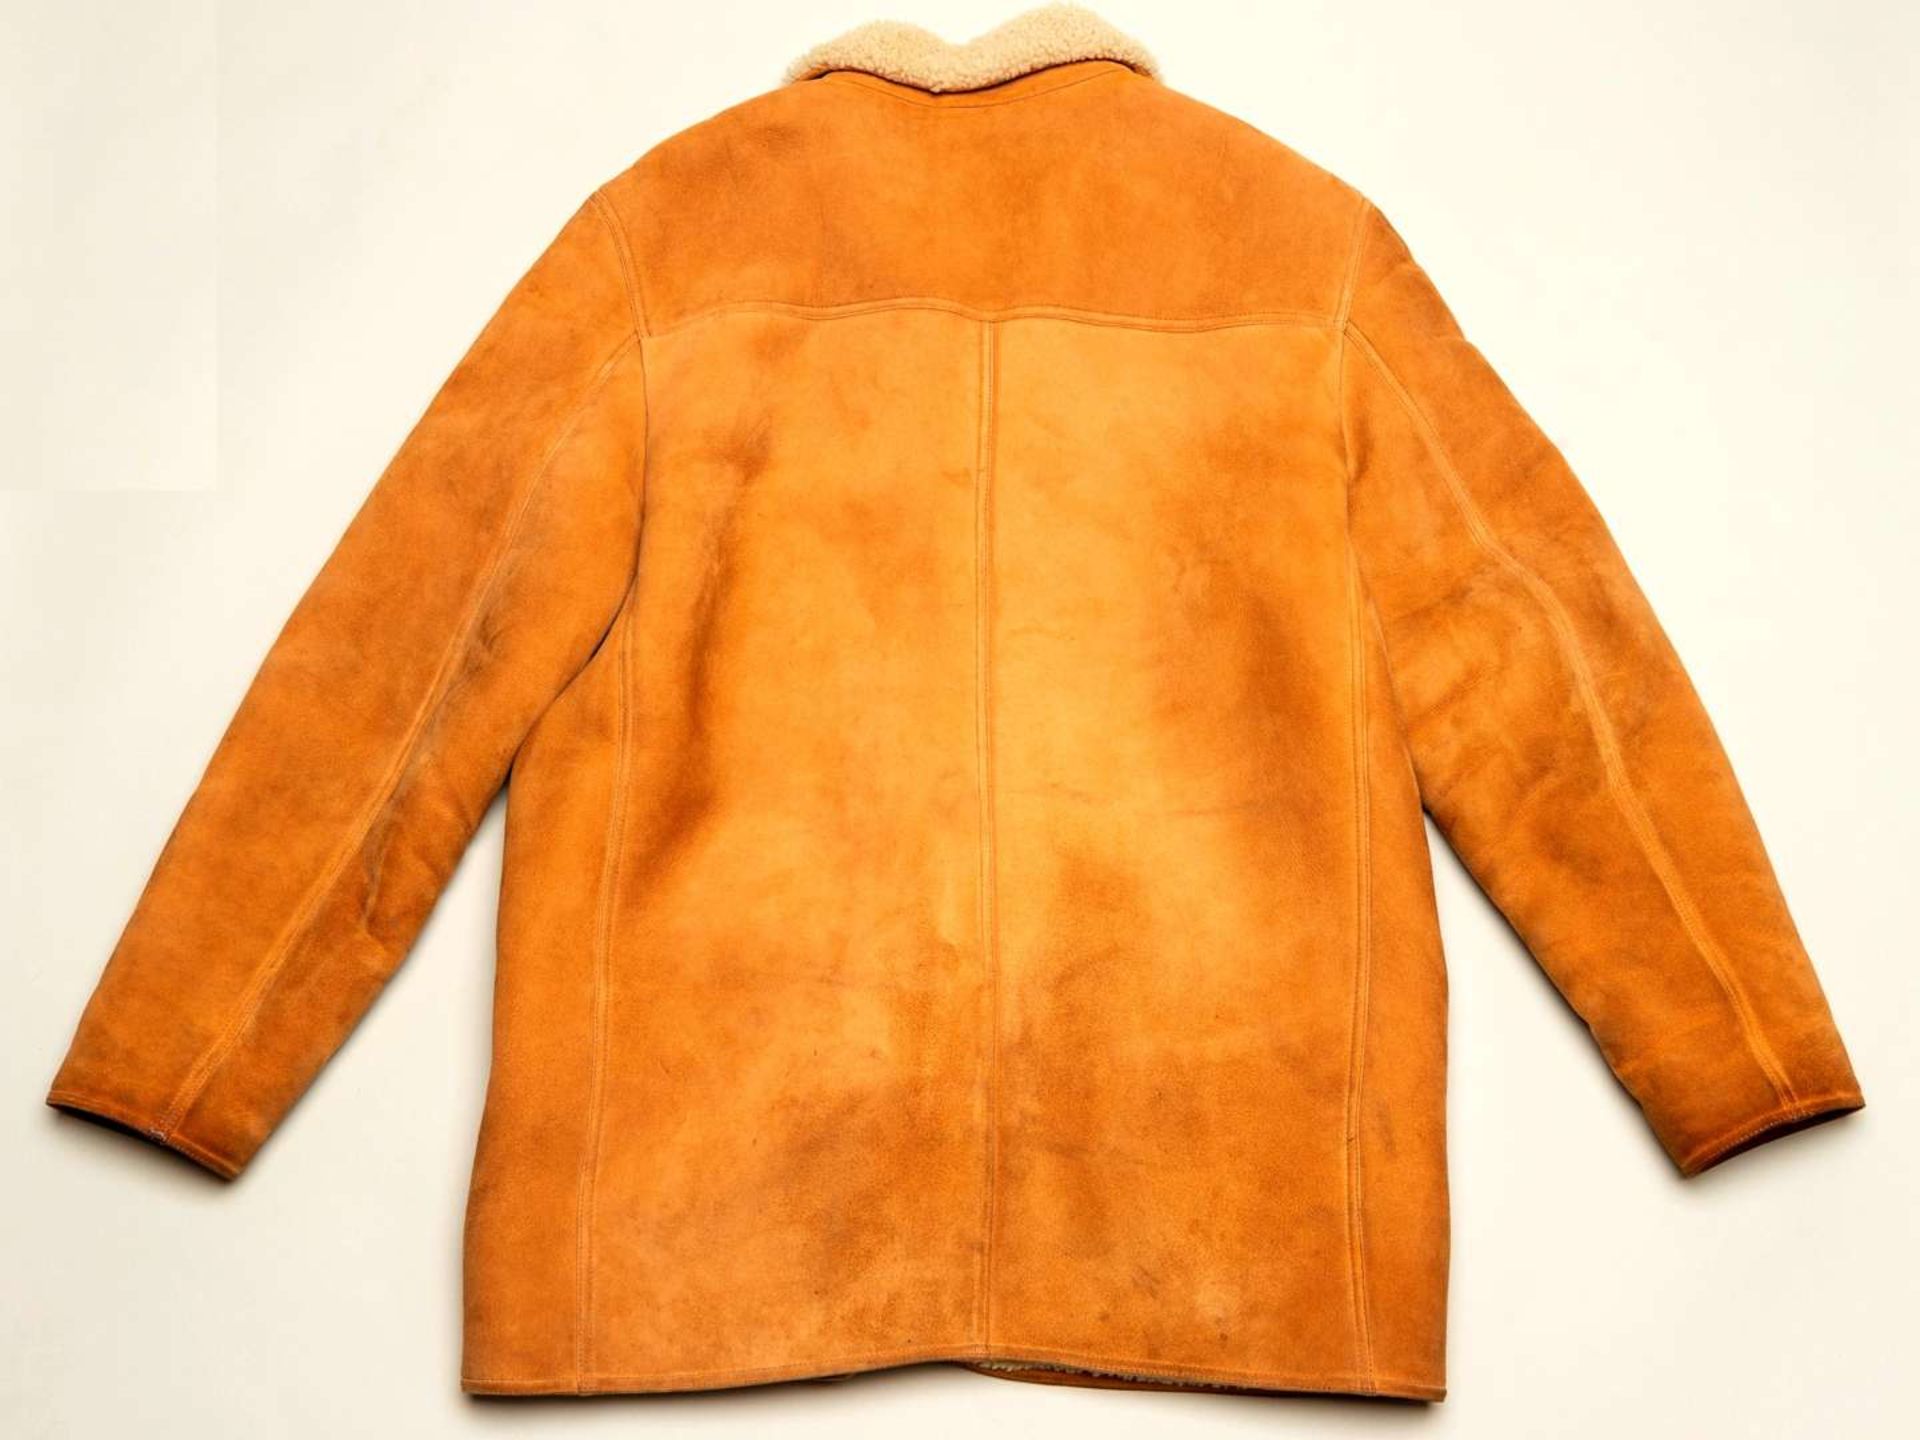 RM WILLIAMS, a men's, tan sheepskin button up coat, size 3XL - Image 3 of 5